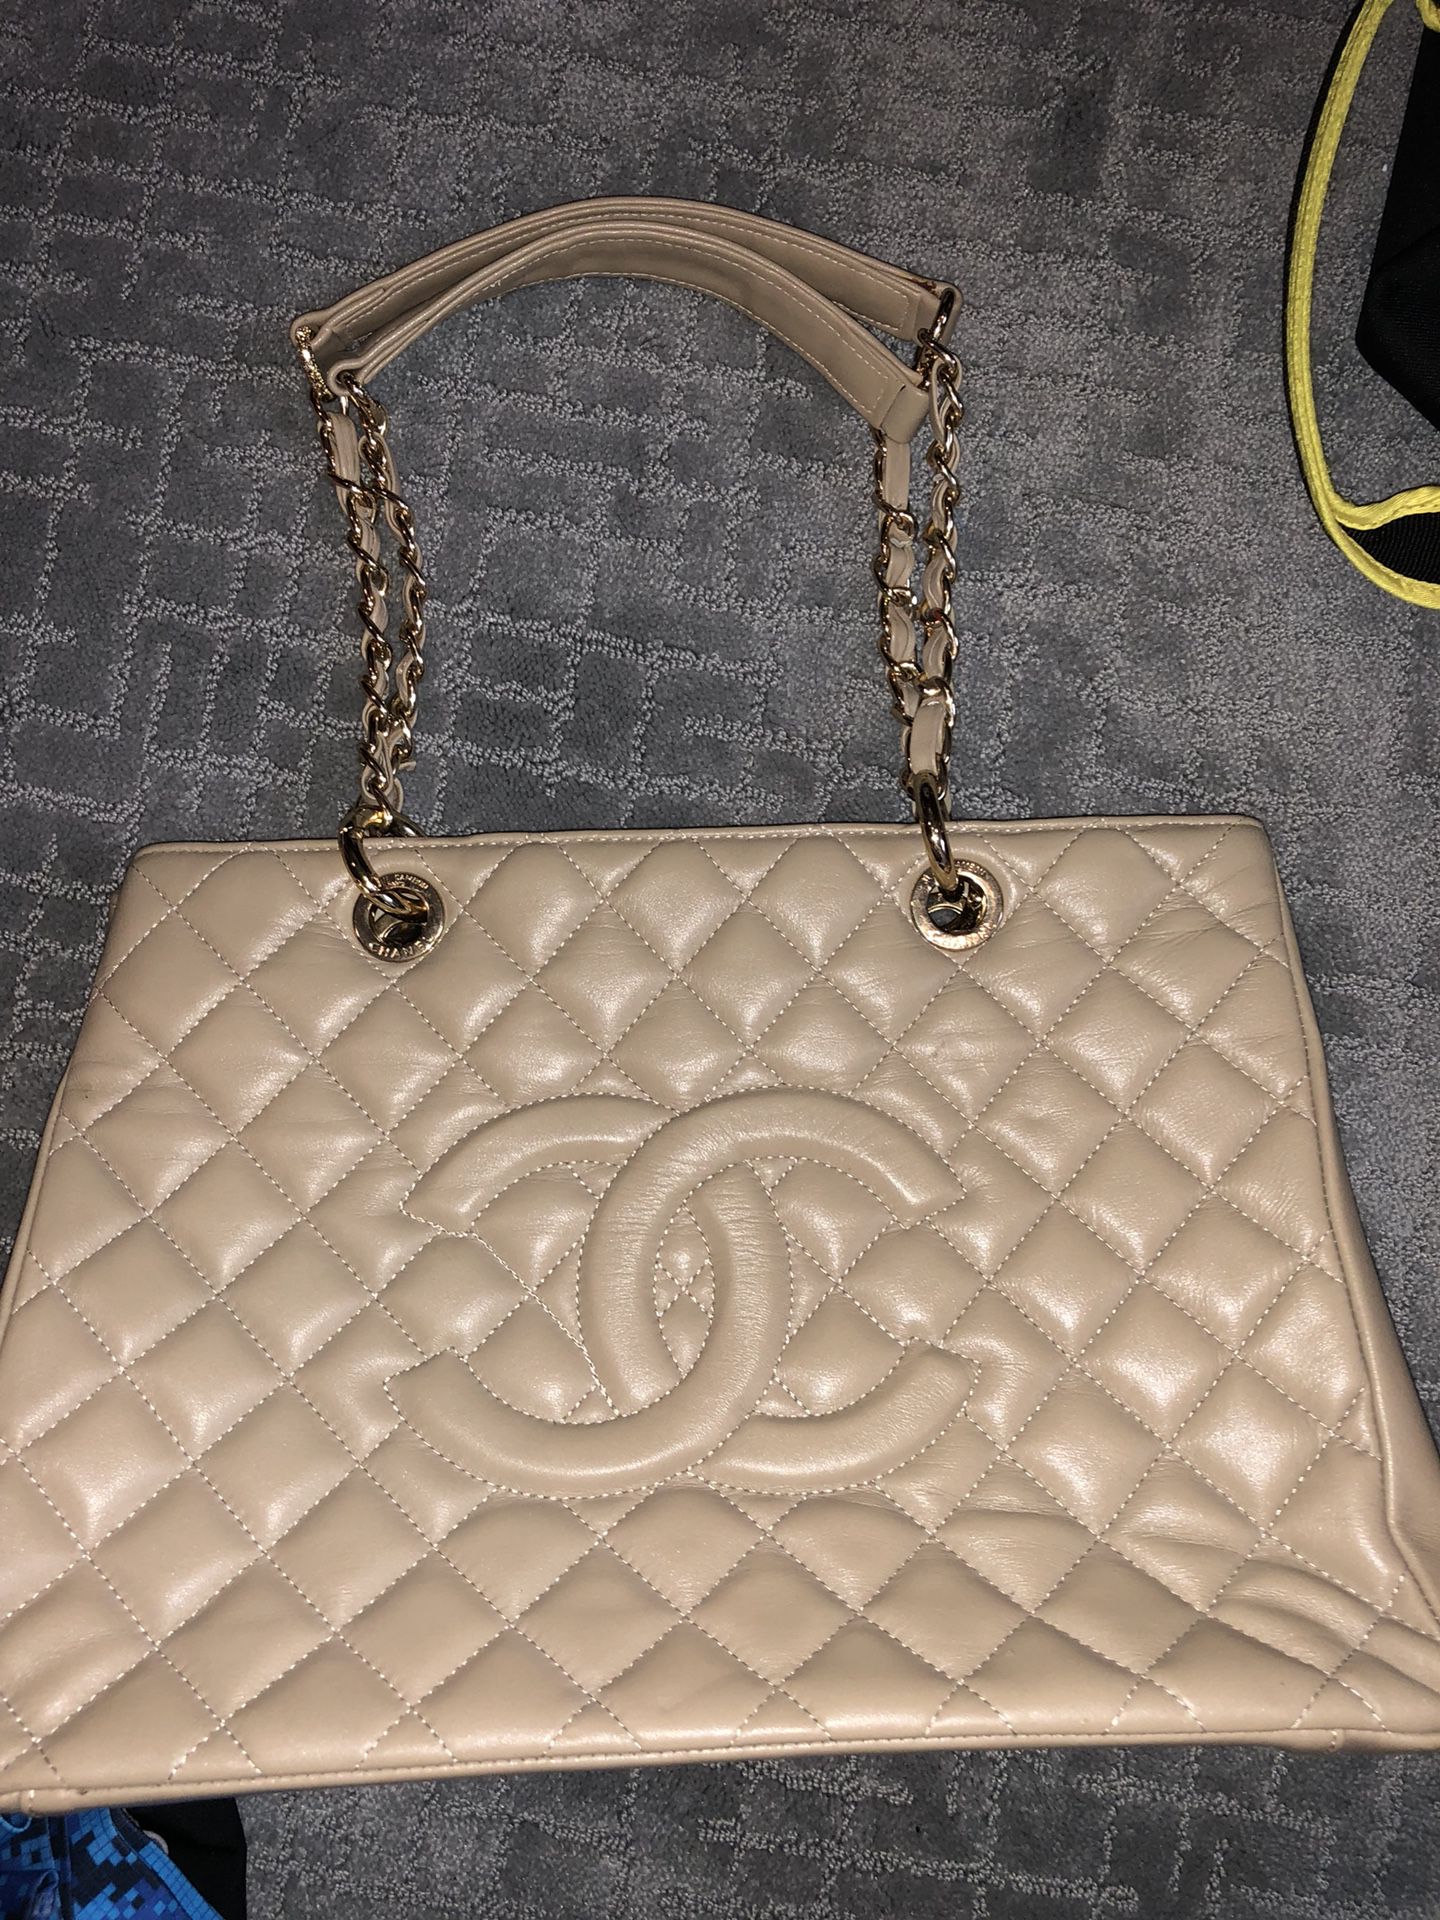 Chanel bag purse